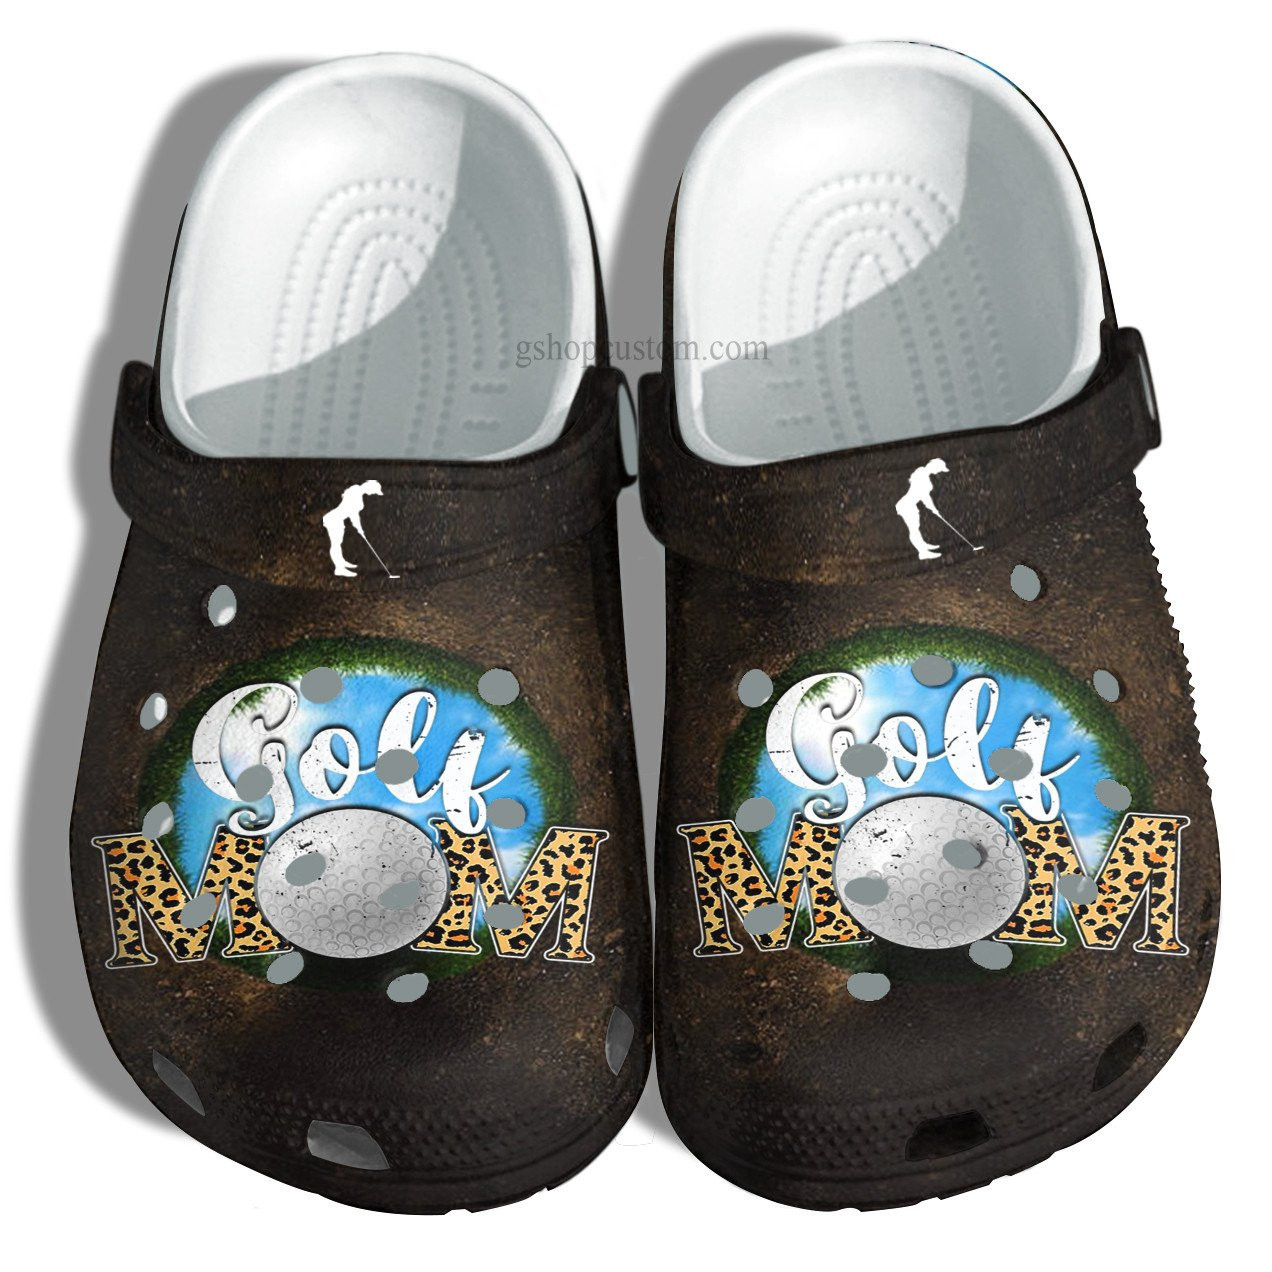 Golf Mom Croc Crocs Clog Shoes Gift Wife Mother Day- Hole Golf Sport Crocs Clog Shoes Gift Women Birthday